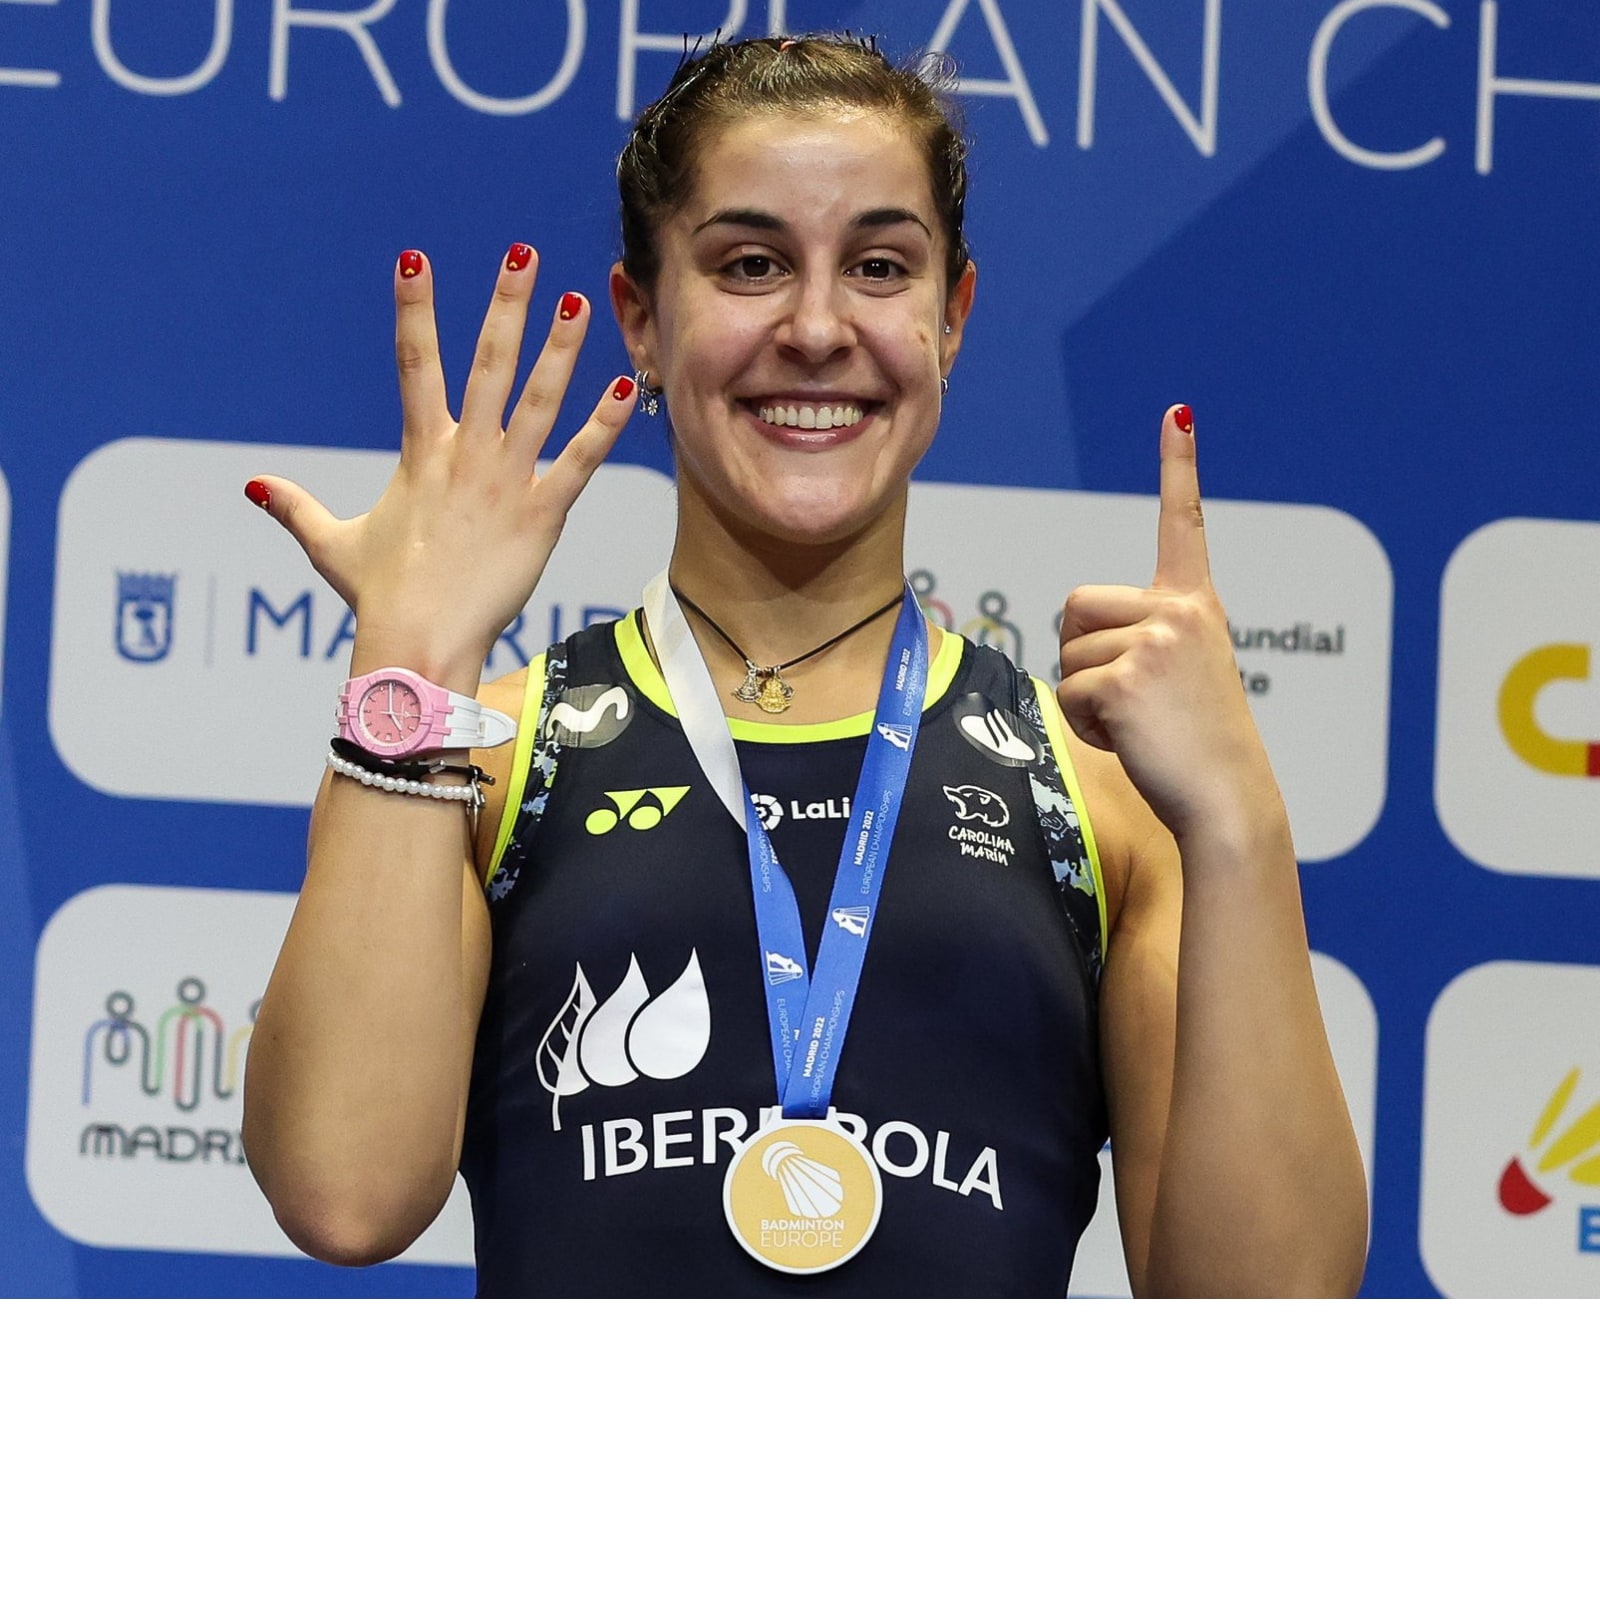 Carolina Marin Wins European Badminton Championships after Lengthy Injury Layoff